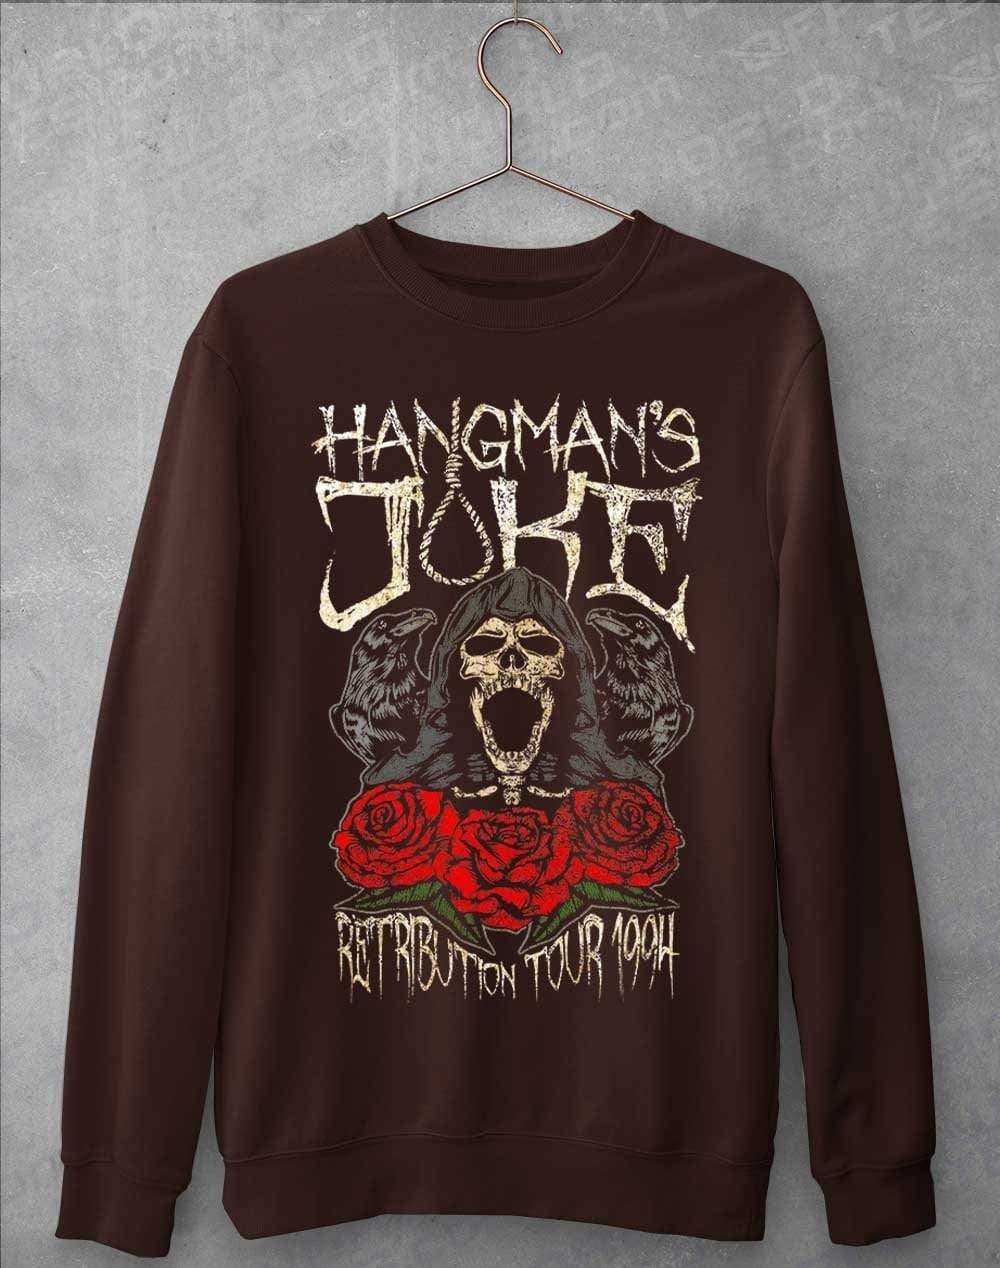 Hangman's Joke Retribution Tour 94 Sweatshirt S / Hot Chocolate  - Off World Tees